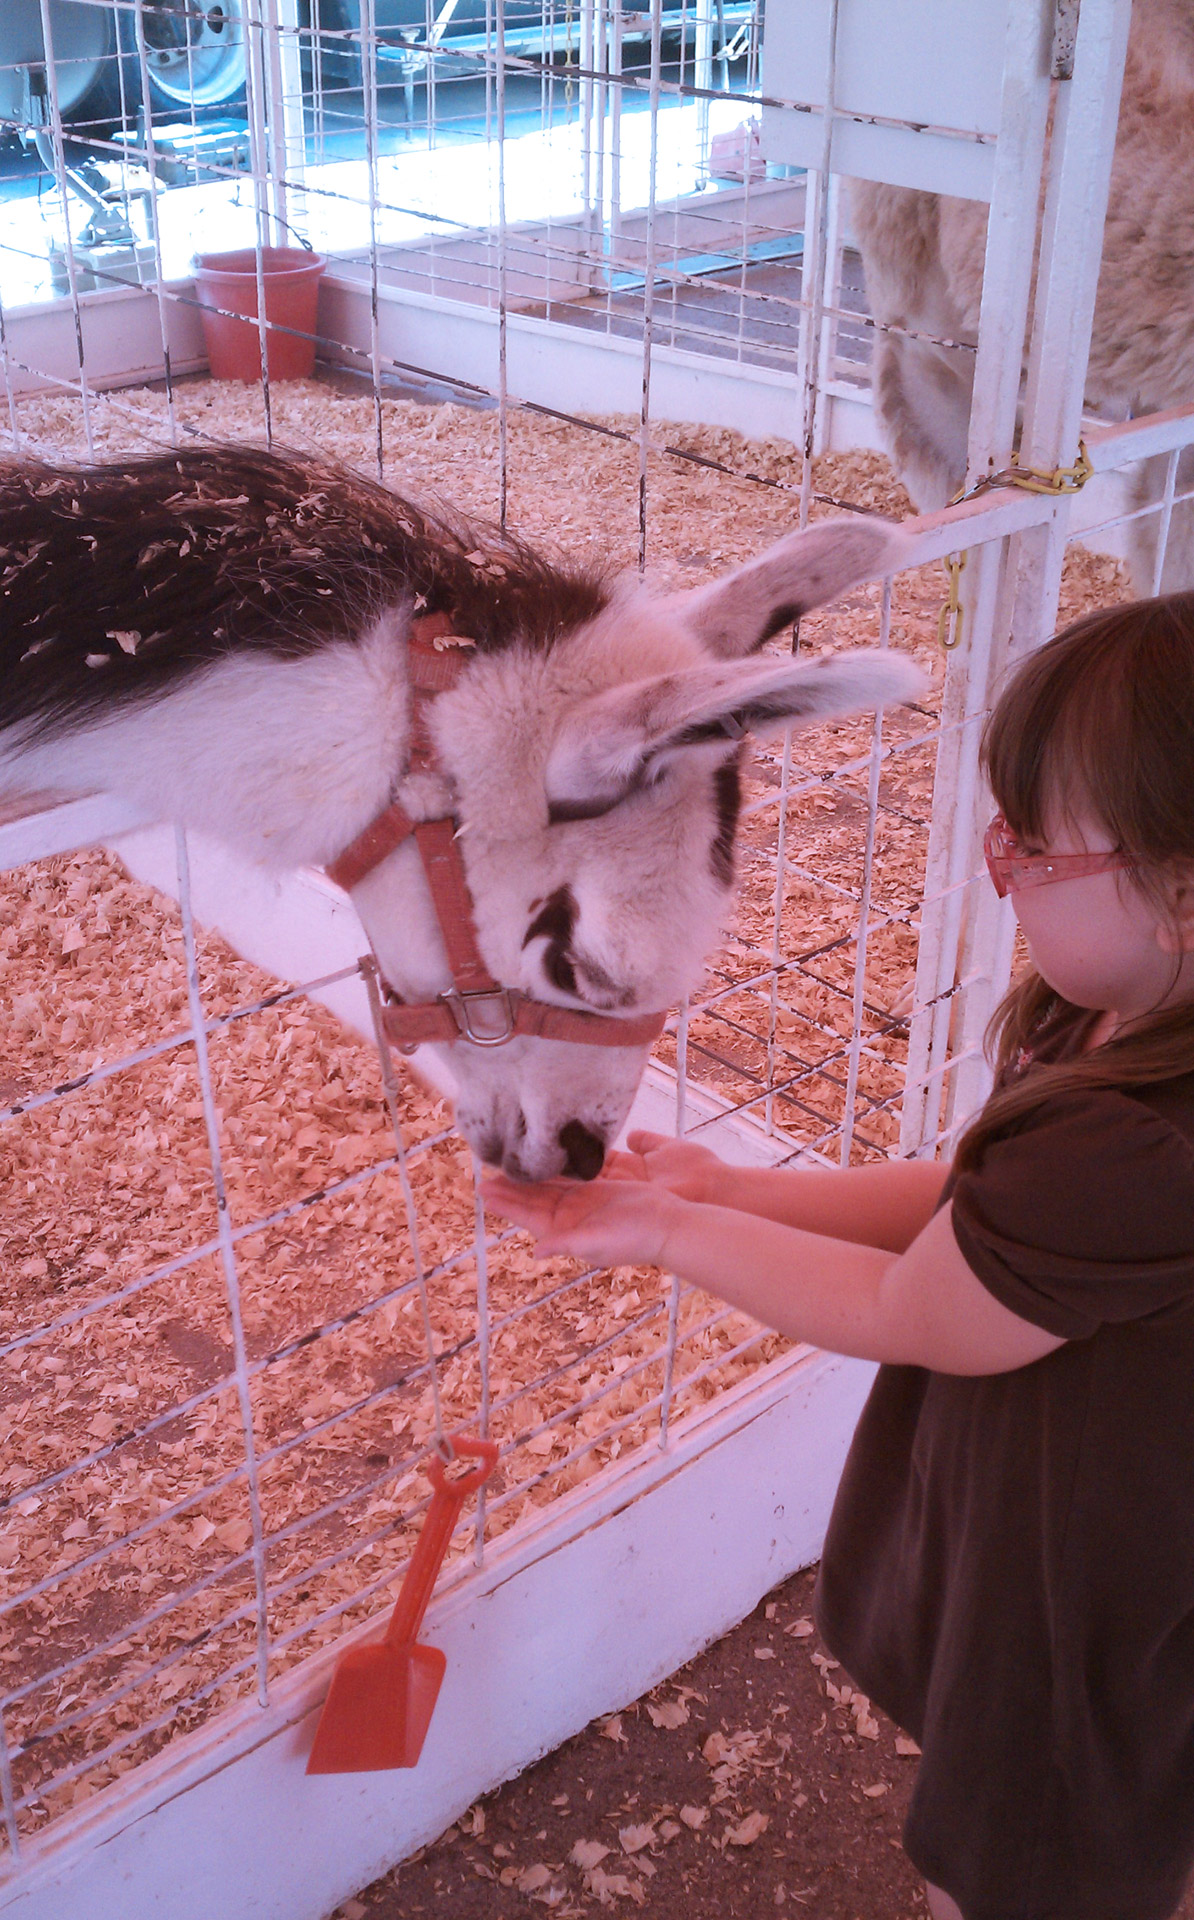 A little girl feeding a llama at a petting zoo.